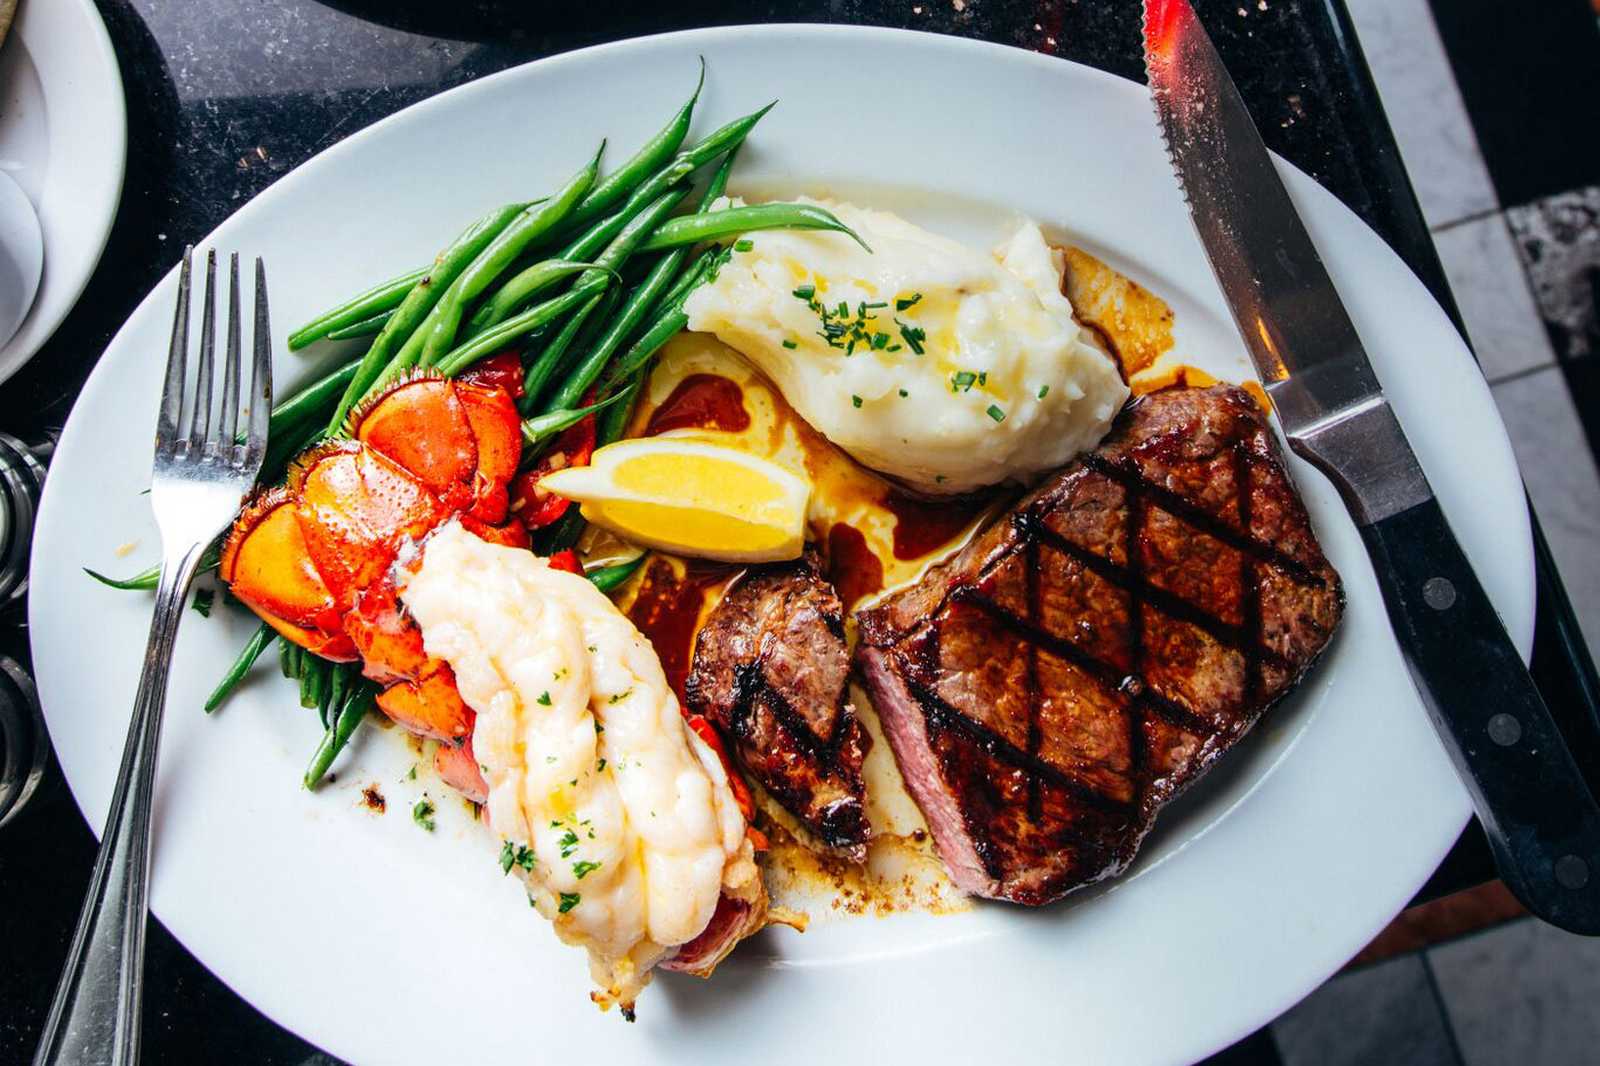 https://fogharbor.com/wp-content/uploads/2018/05/steak-seafood-plate-1.jpg